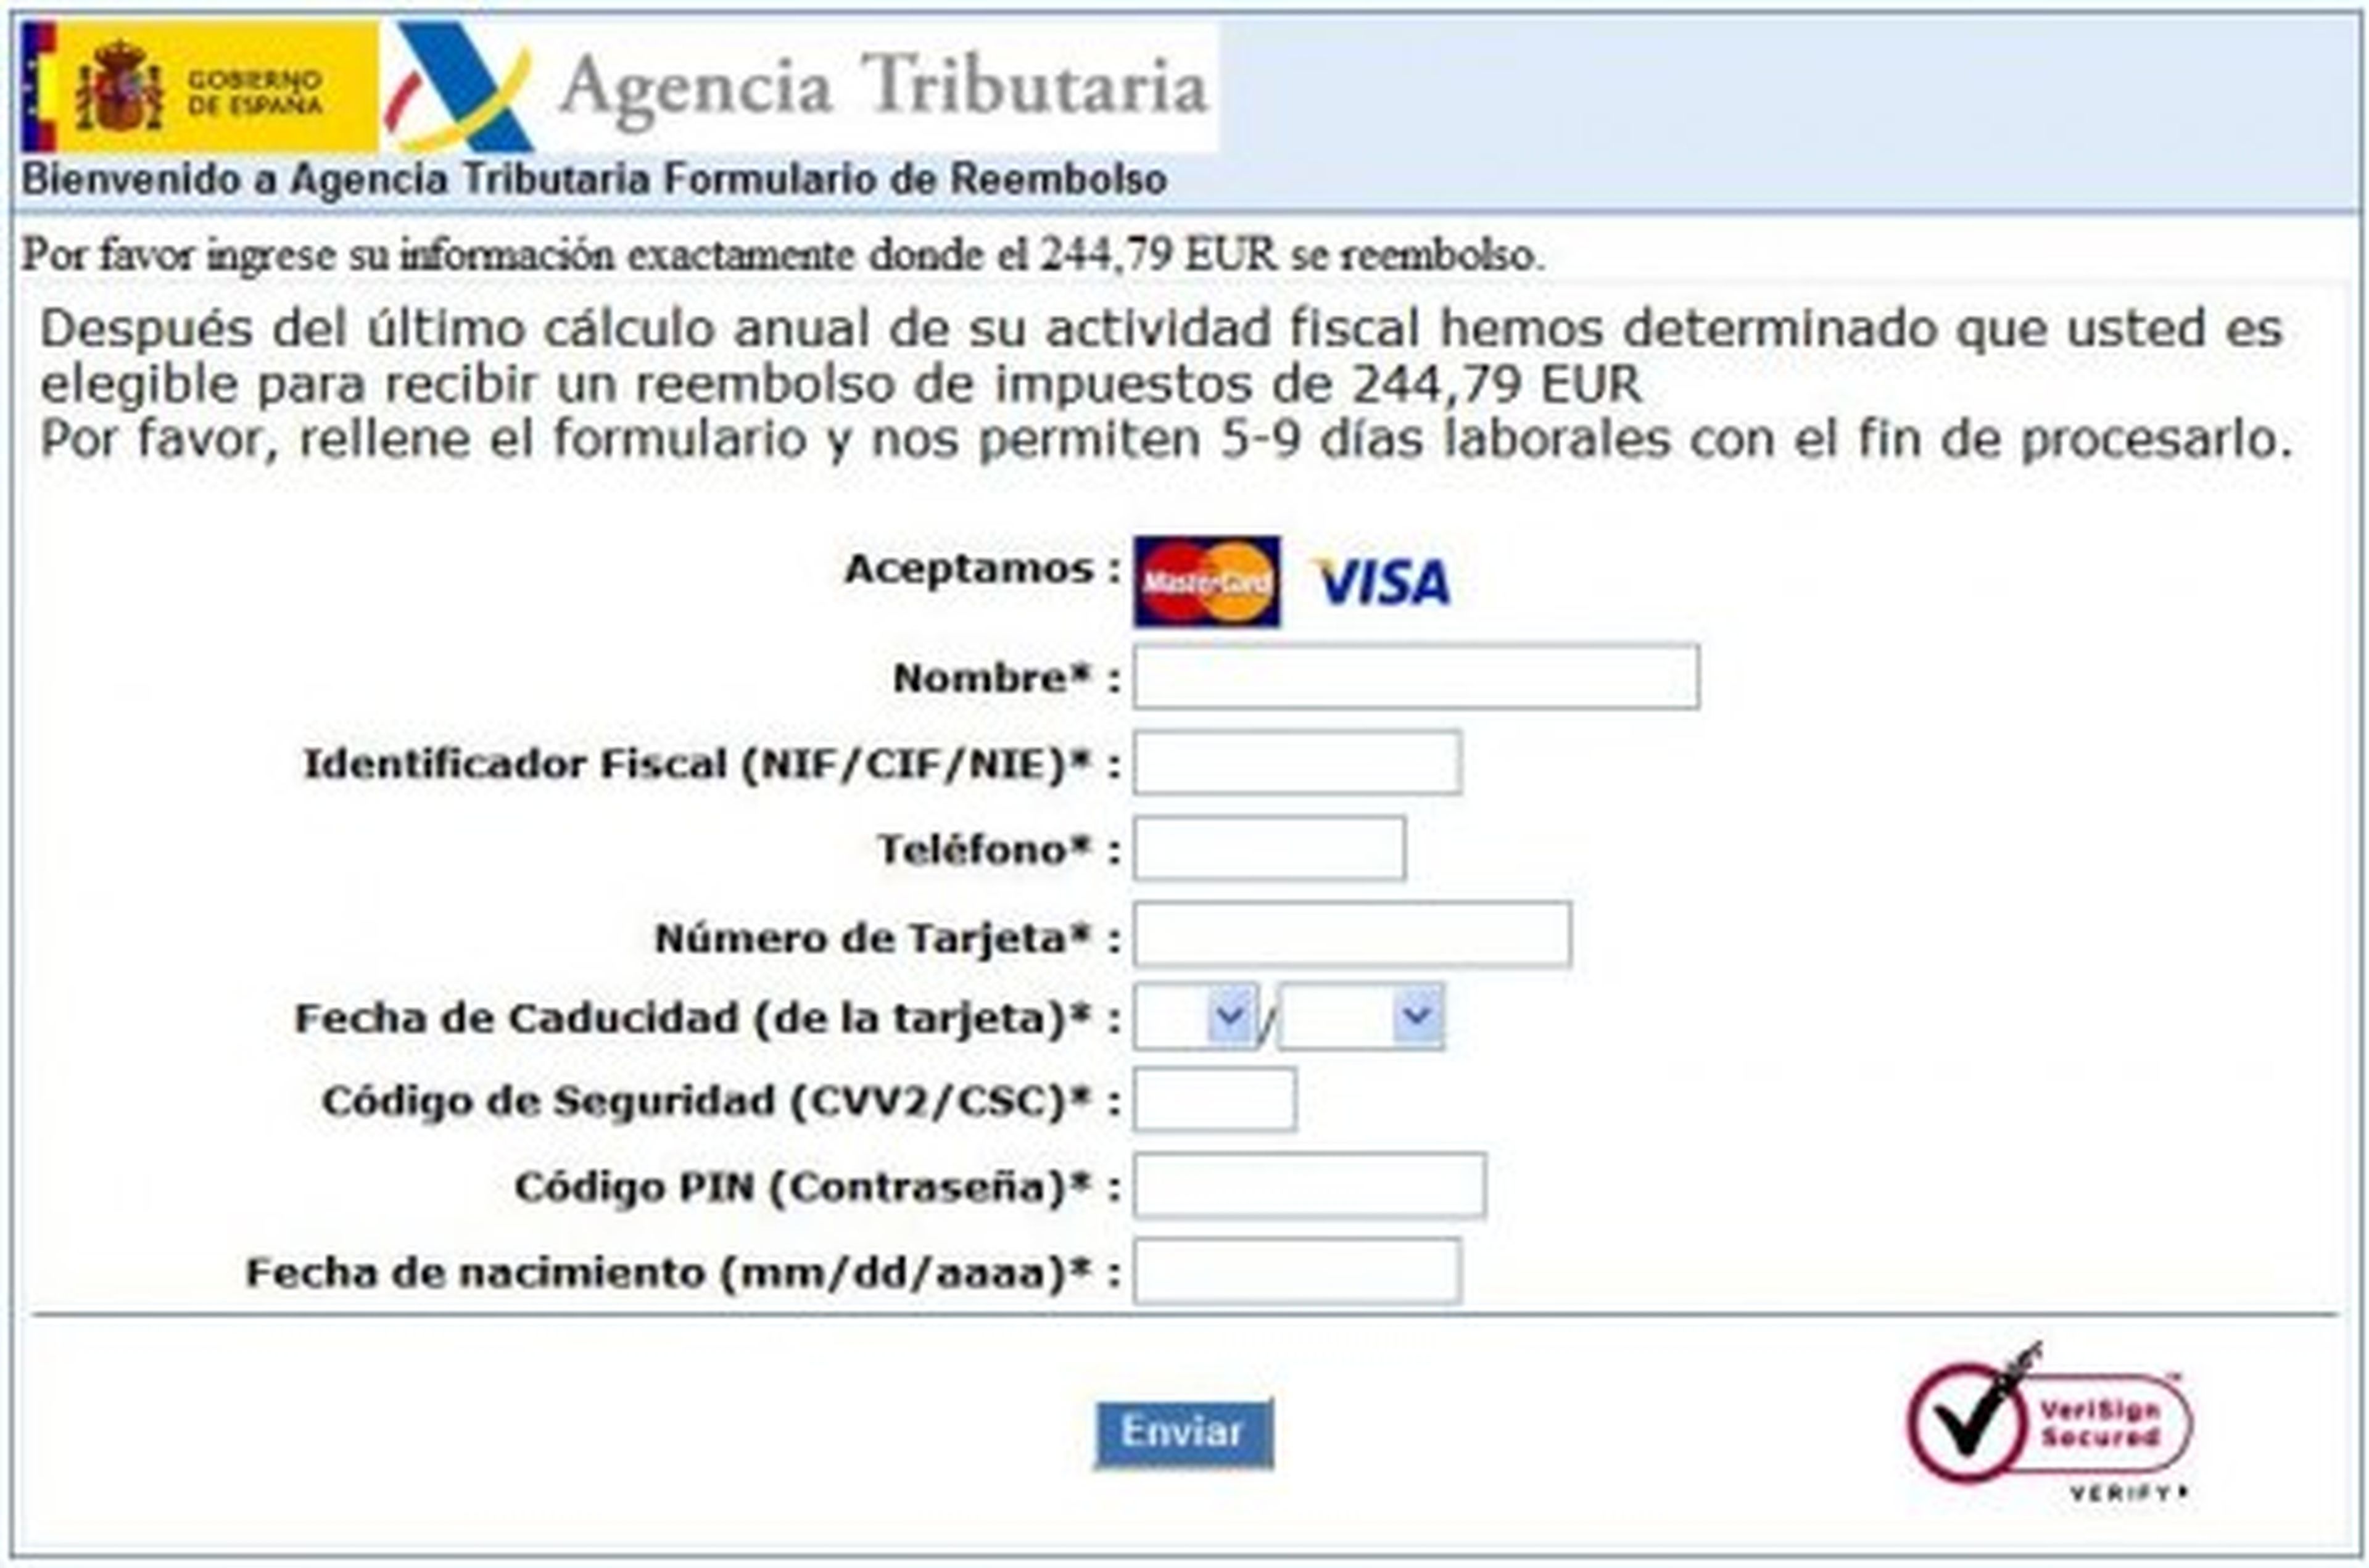 agencia tributaria phishing